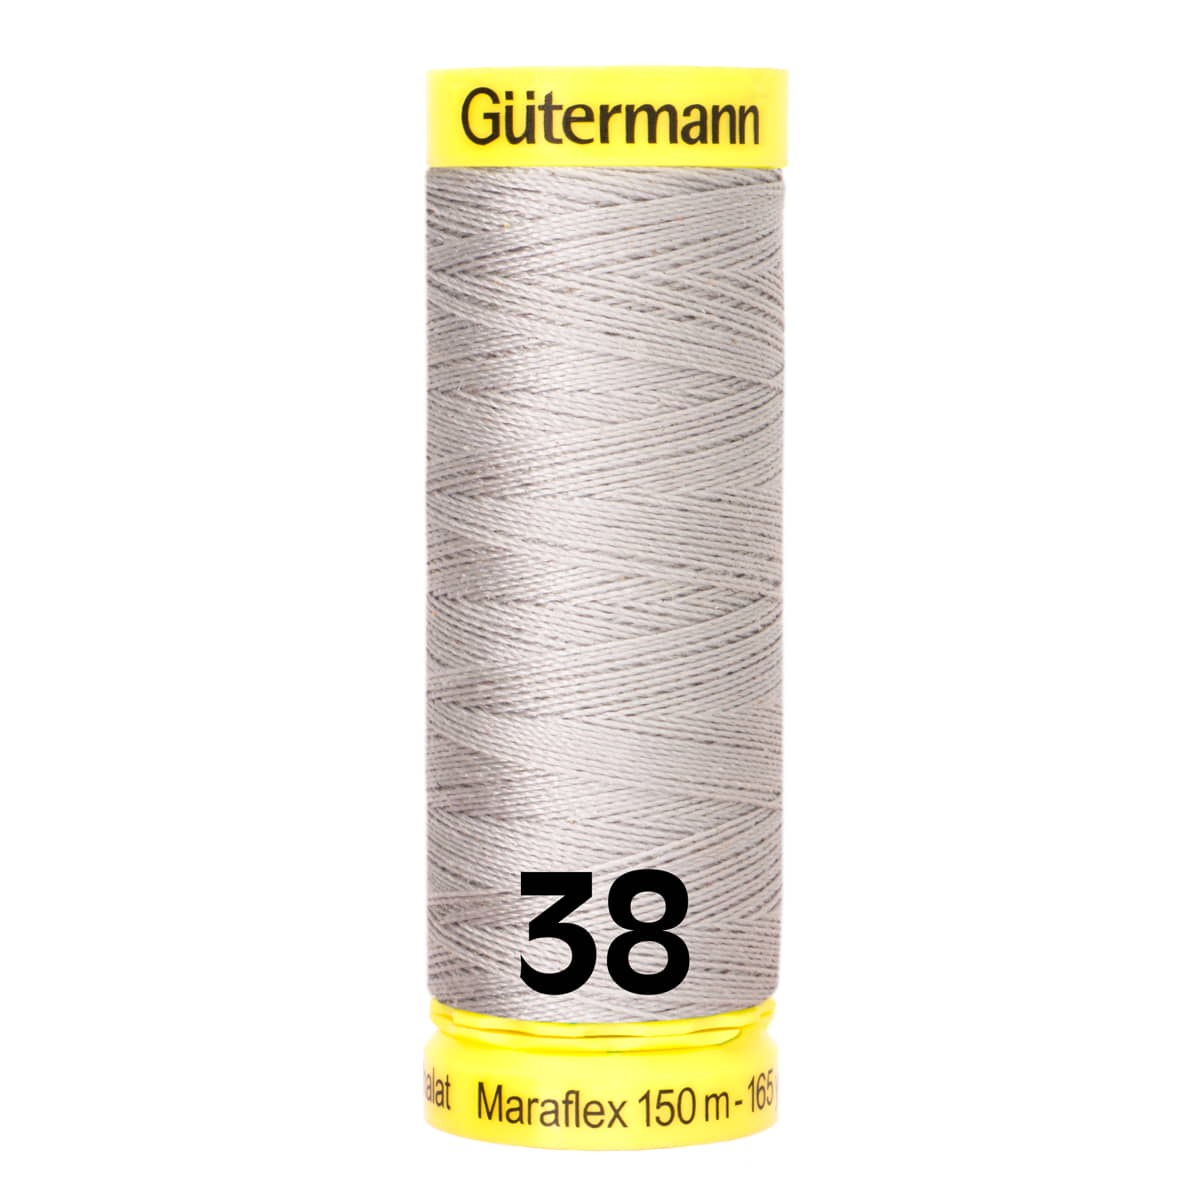 Gütermann MaraFlex 150m - 38 licht grijs GUTERMANN-MARAFLEX-150-38 4029394998799 - Fourniturenkraam.nl